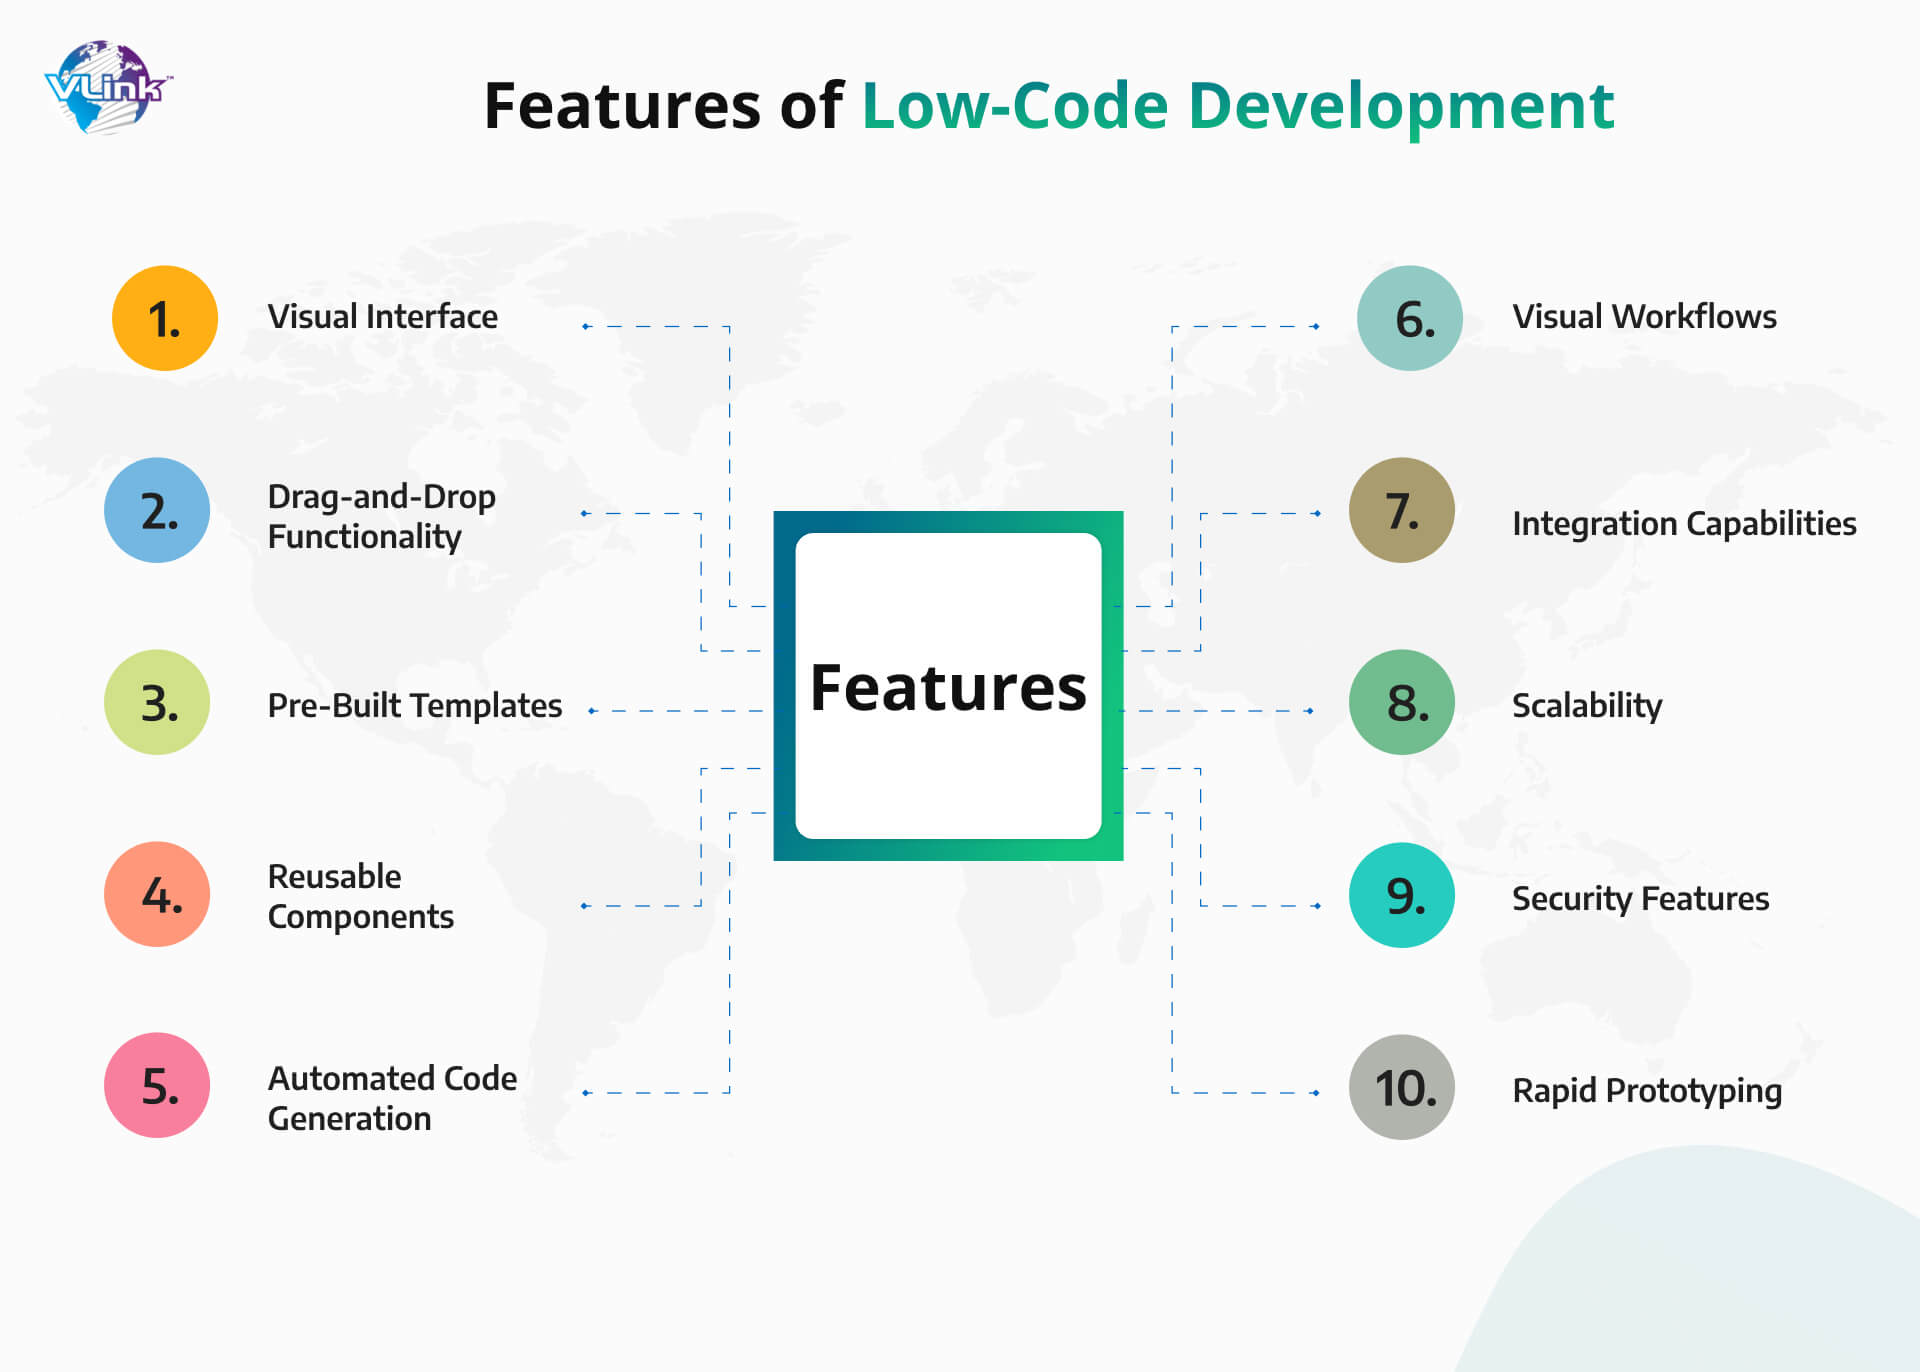 Features of Low-Code Development